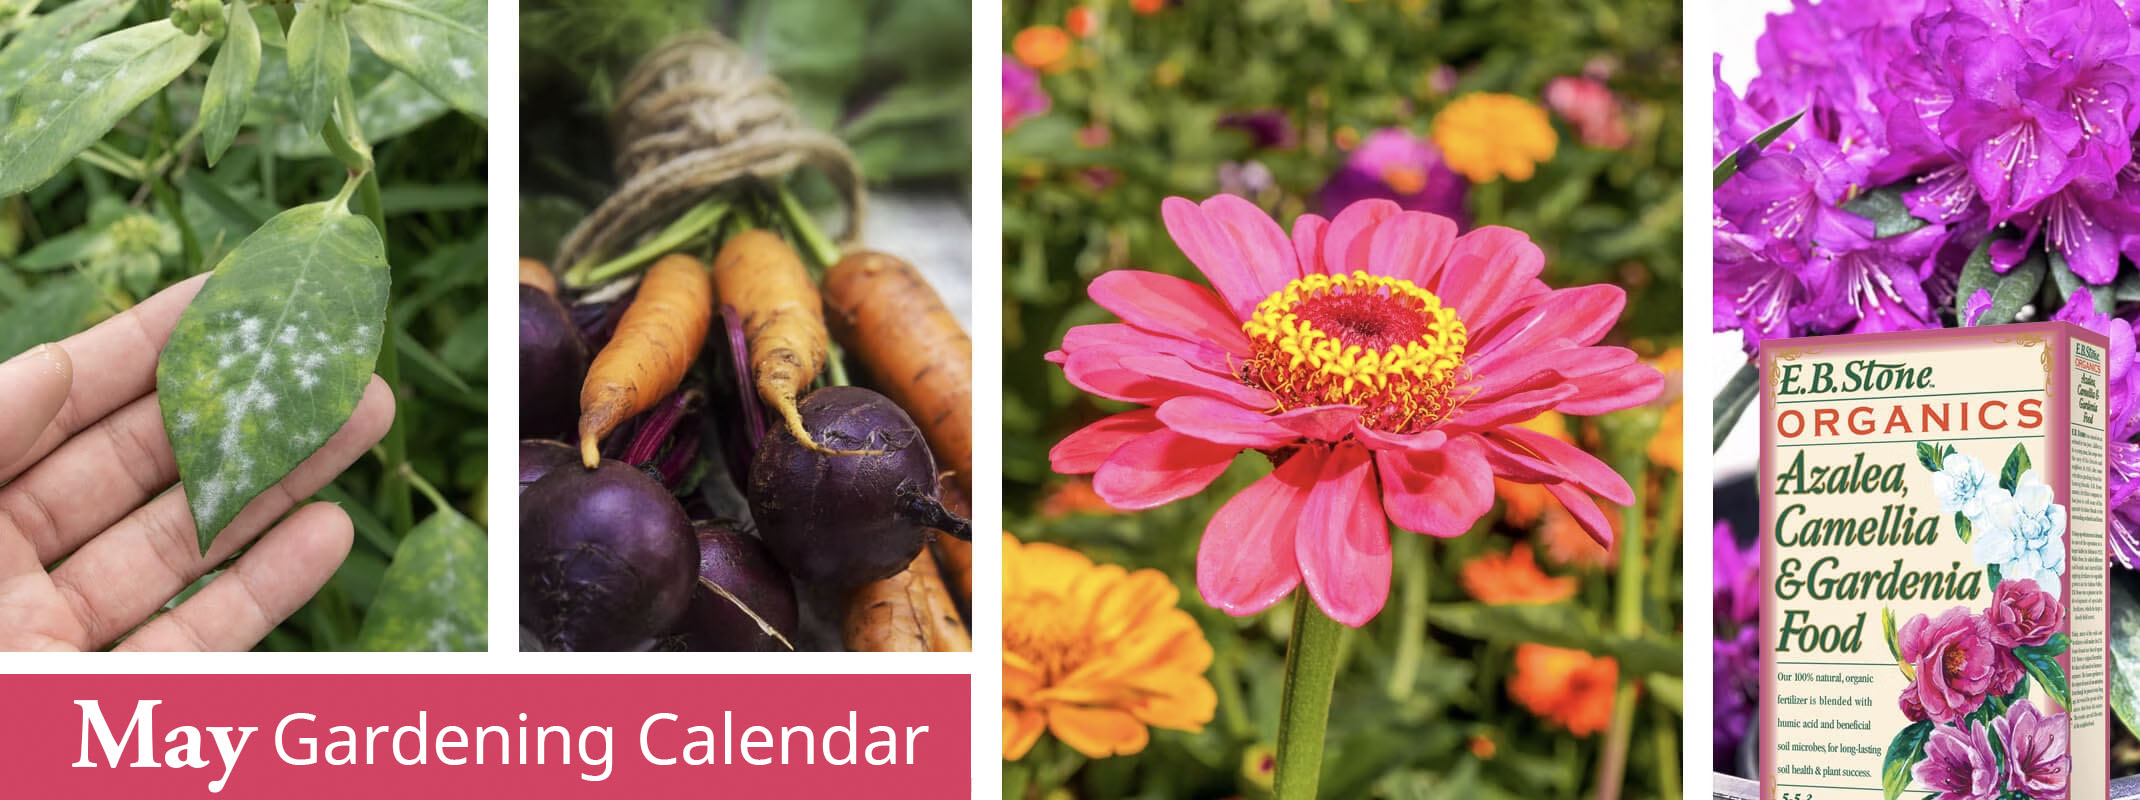 may gardening calendar items winter veggies, zinnia, mold on leaf and fertilzer